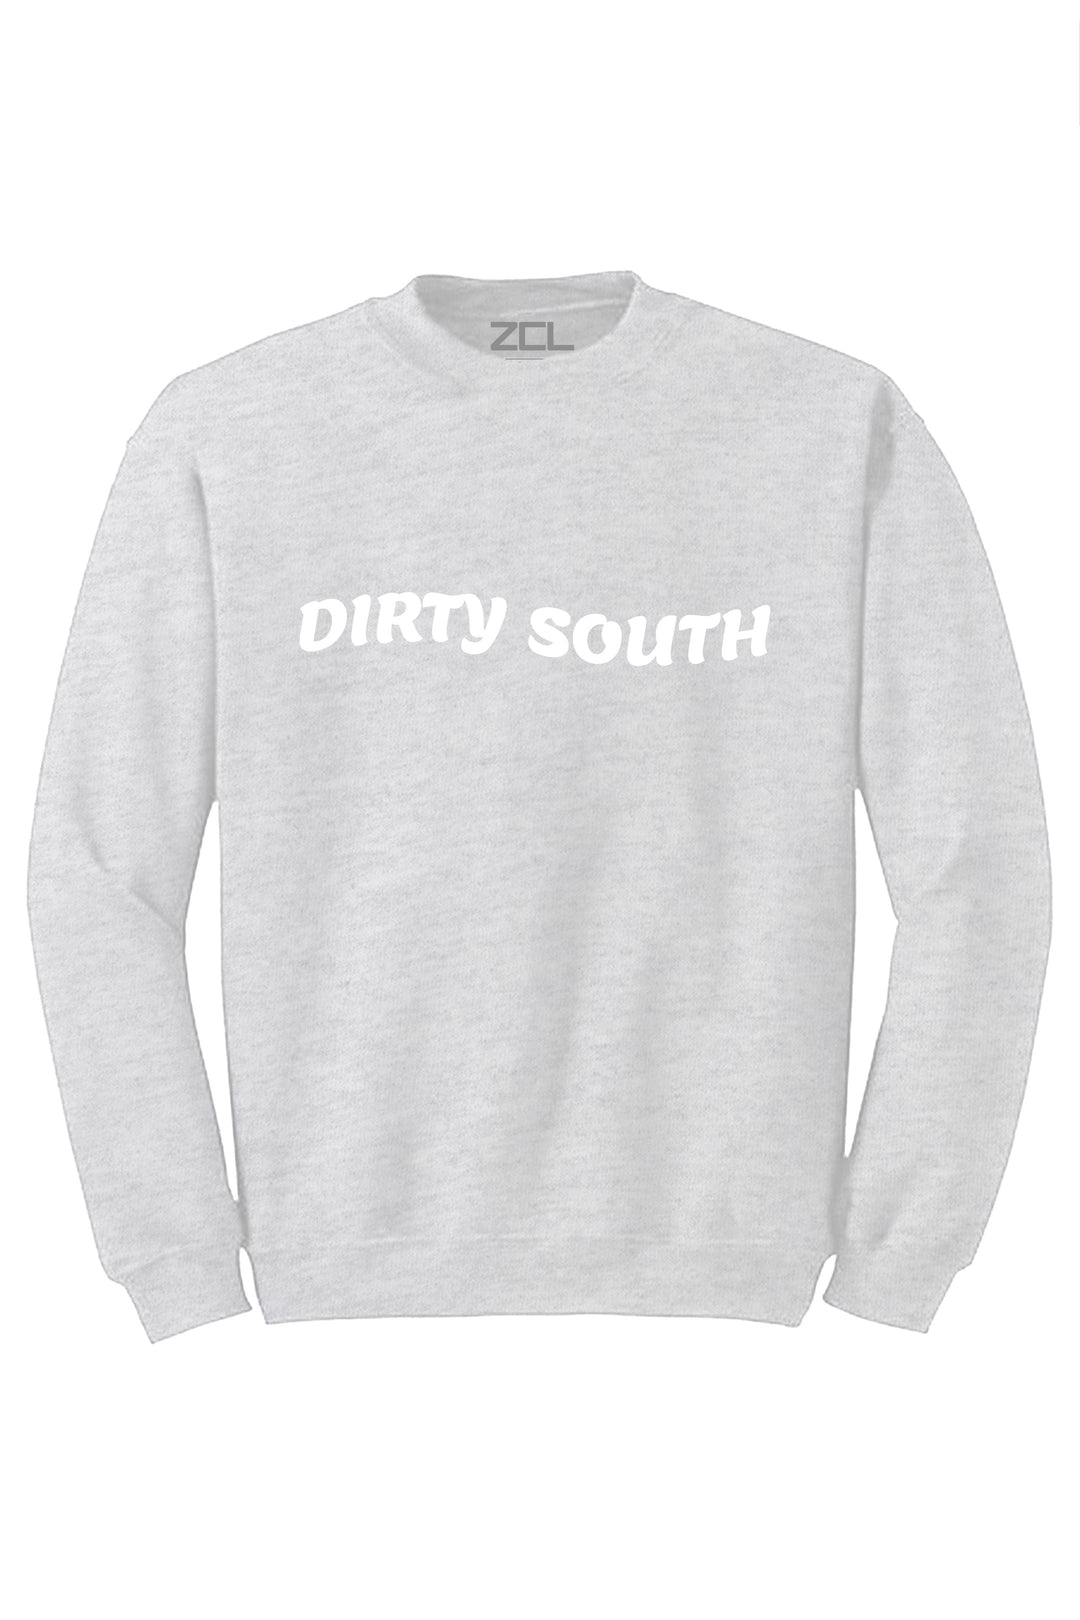 Dirty South Crewneck Sweatshirt (White Logo) - Zamage